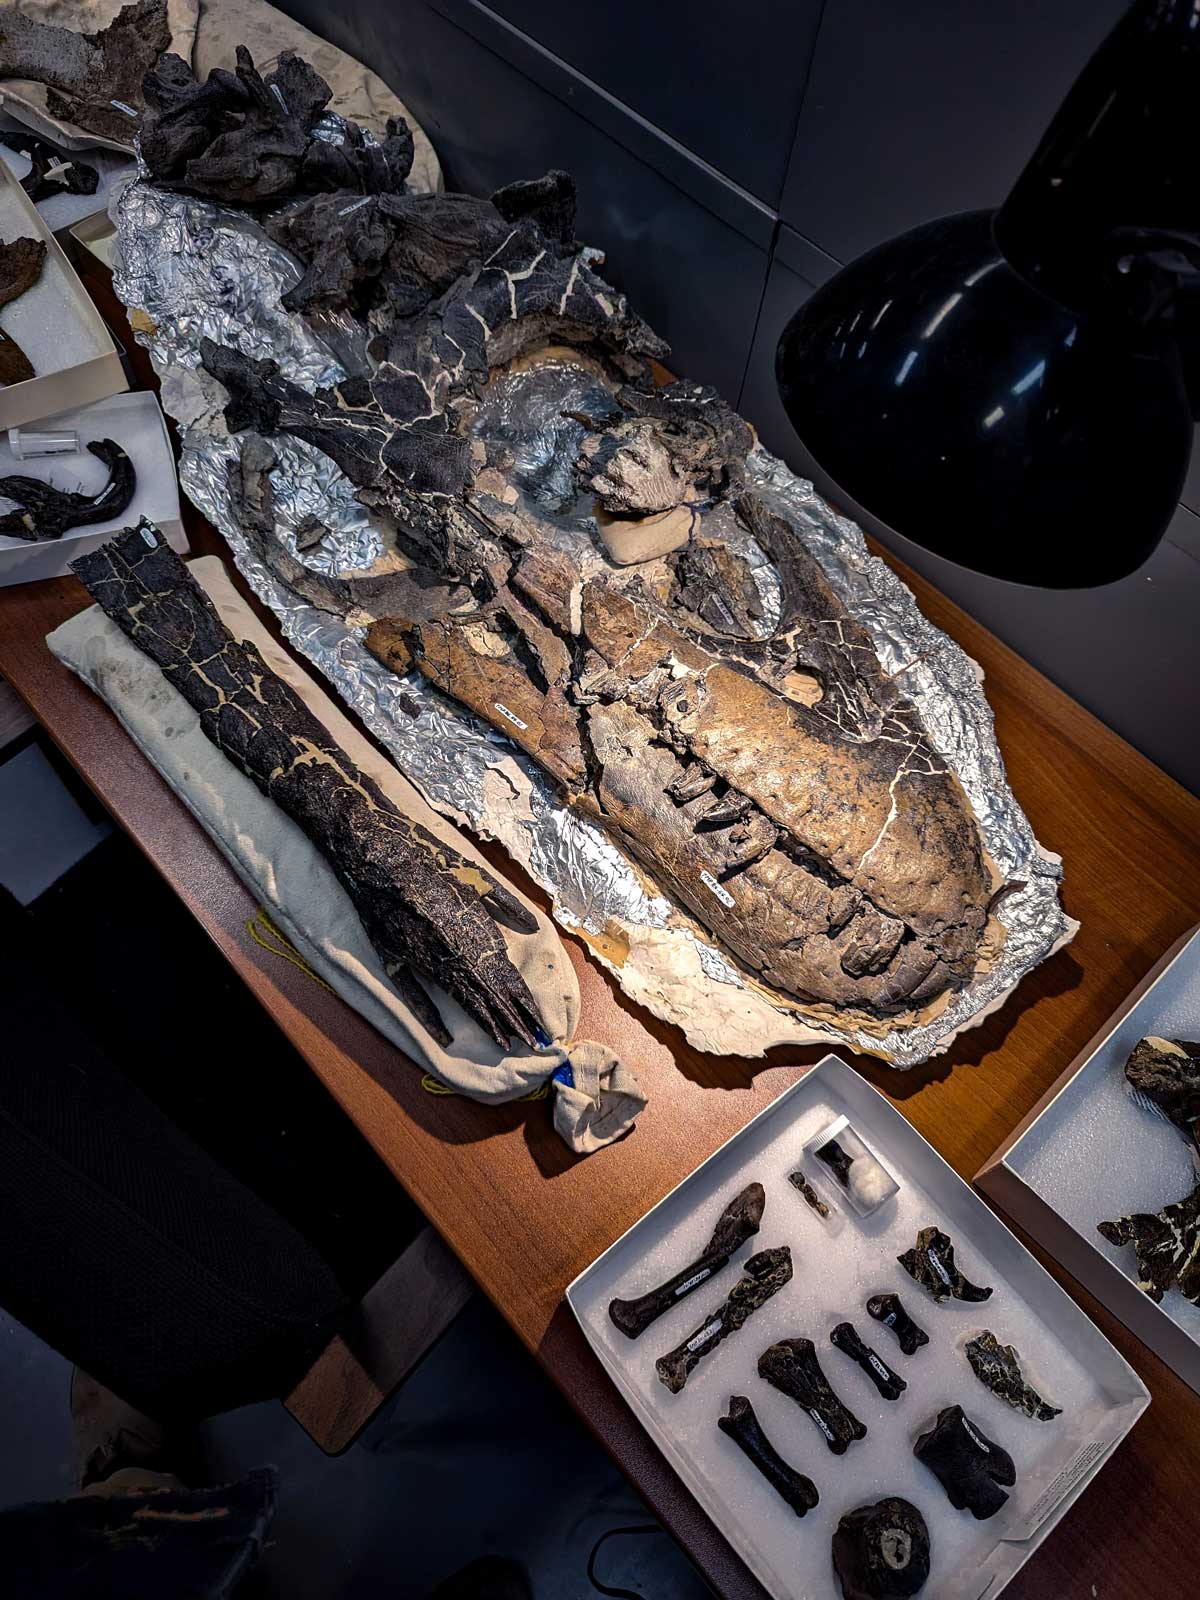 A weathered Albertosaurus skull lying on a desk for study. A lamp illuminates its jaws full of dagger like teeth.